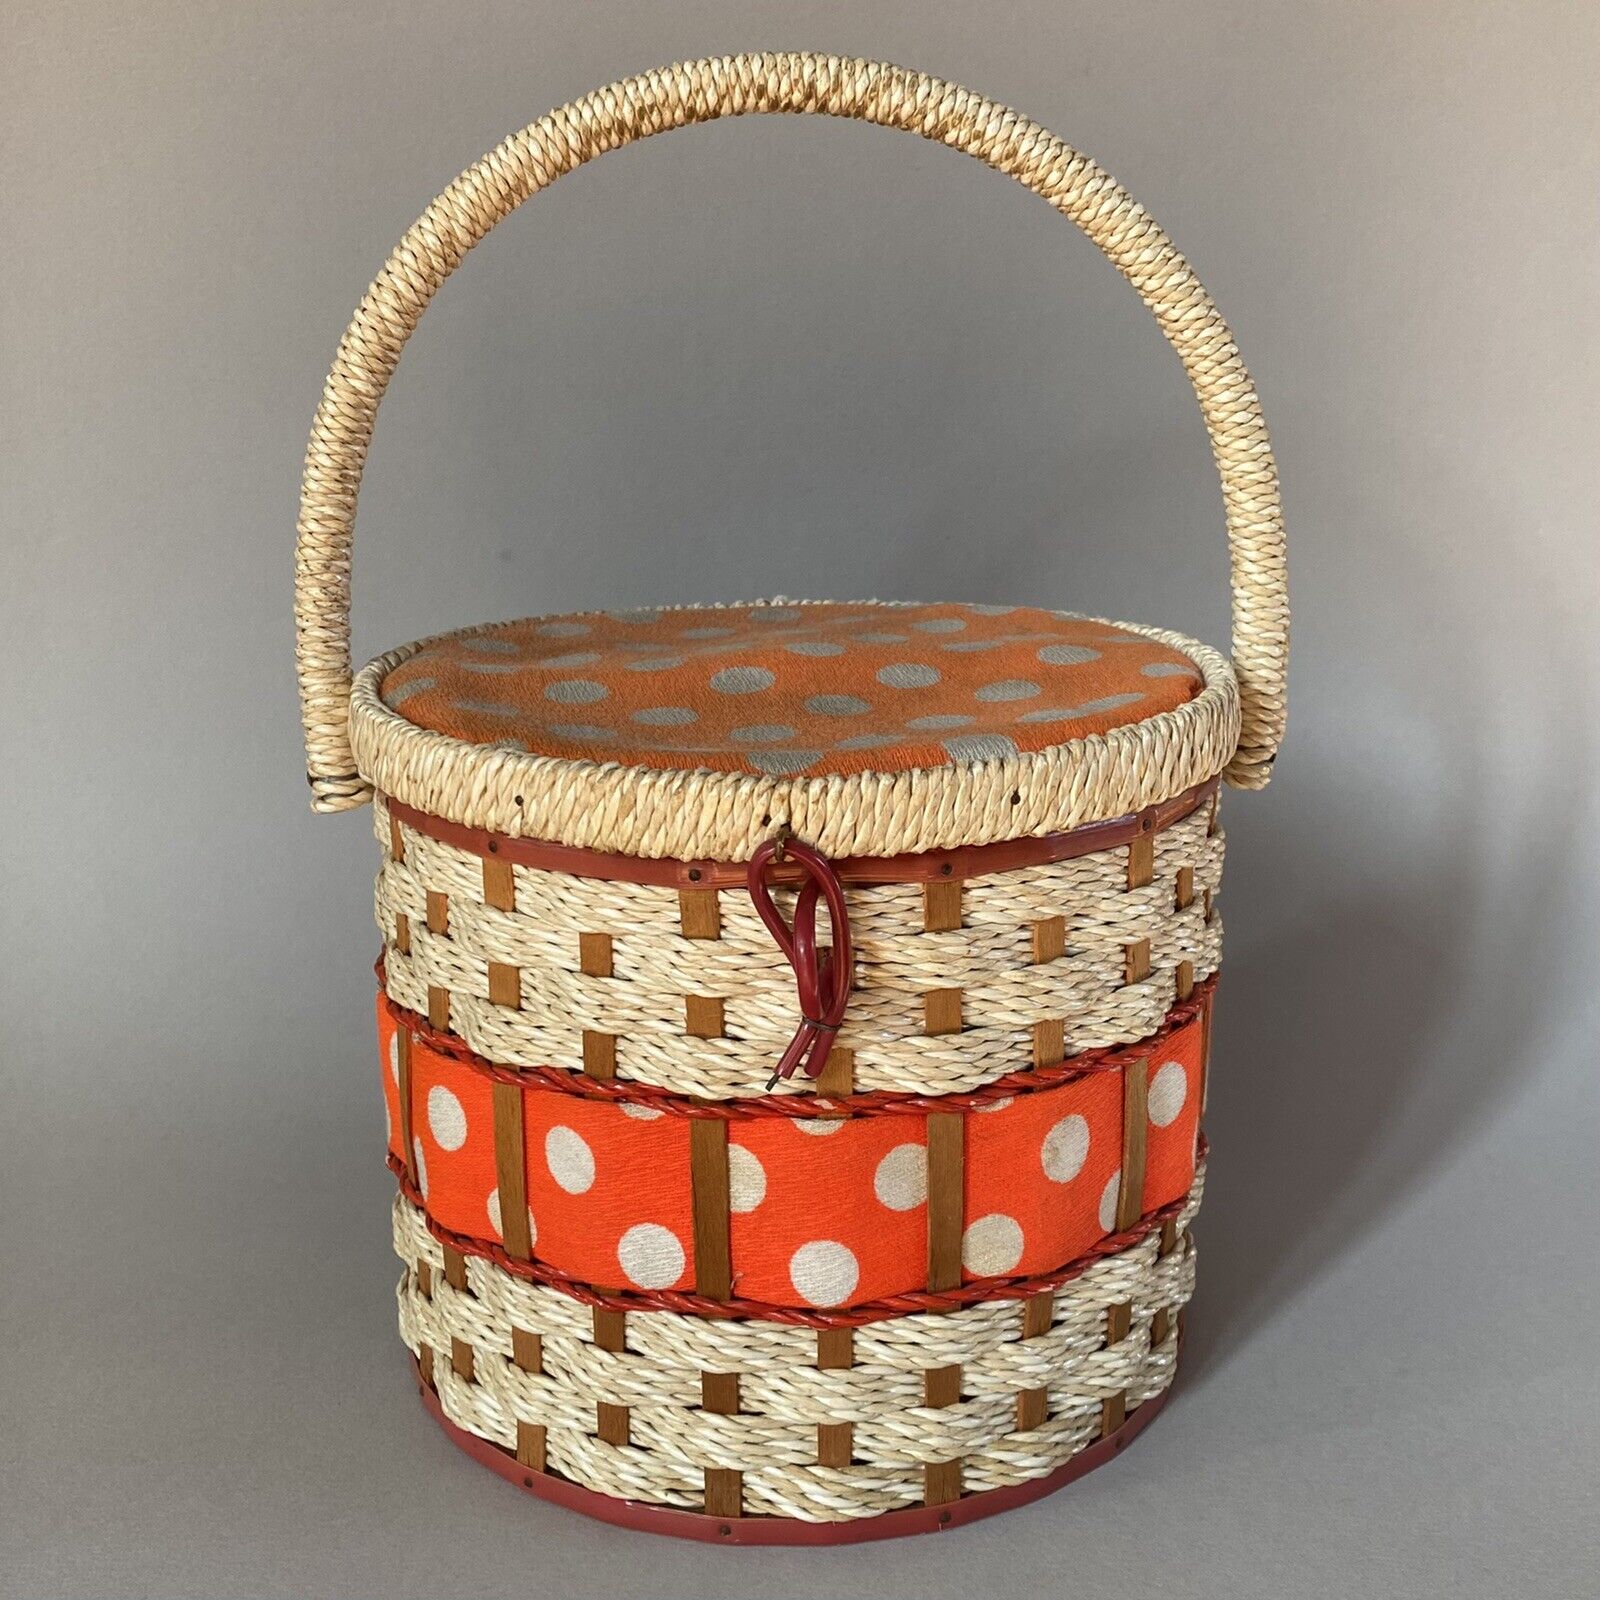 Genuine Vintage 50’s/60’s Japanese Wicker/Rattan Sewing Box/Basket - Polka Dot